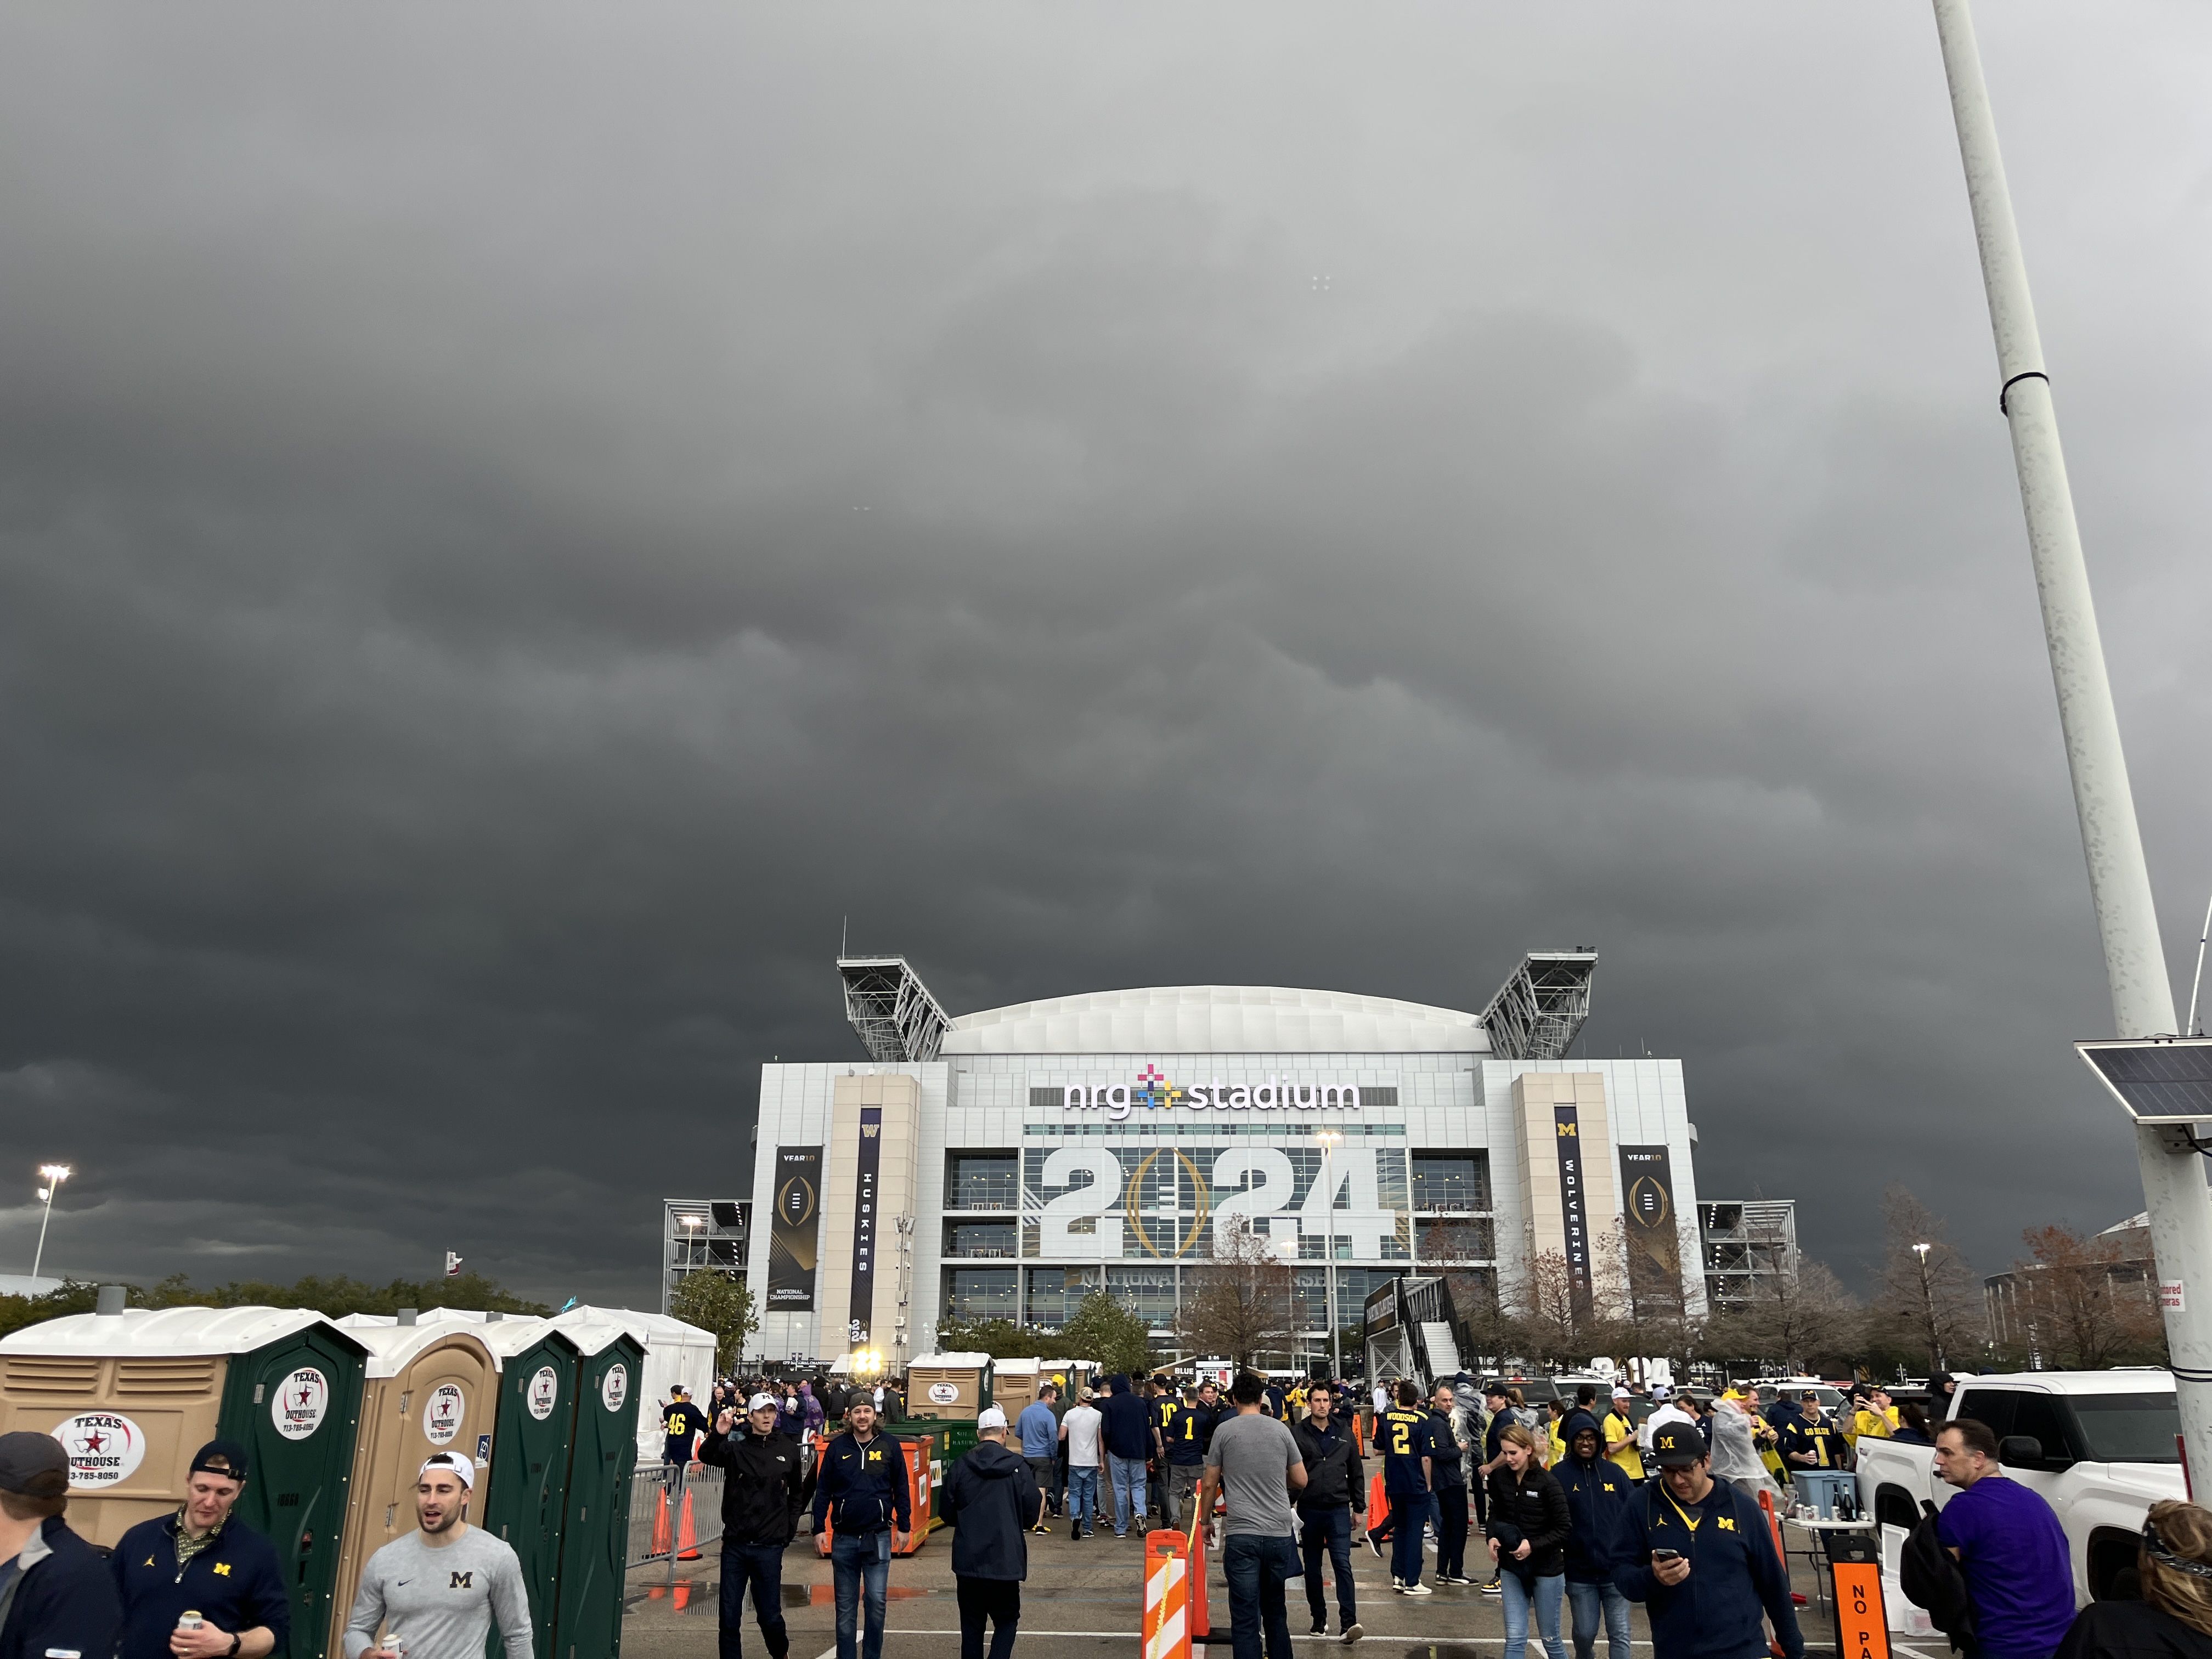 NRG Stadium on Monday afternoon. Photo: Everett Cook/Axios